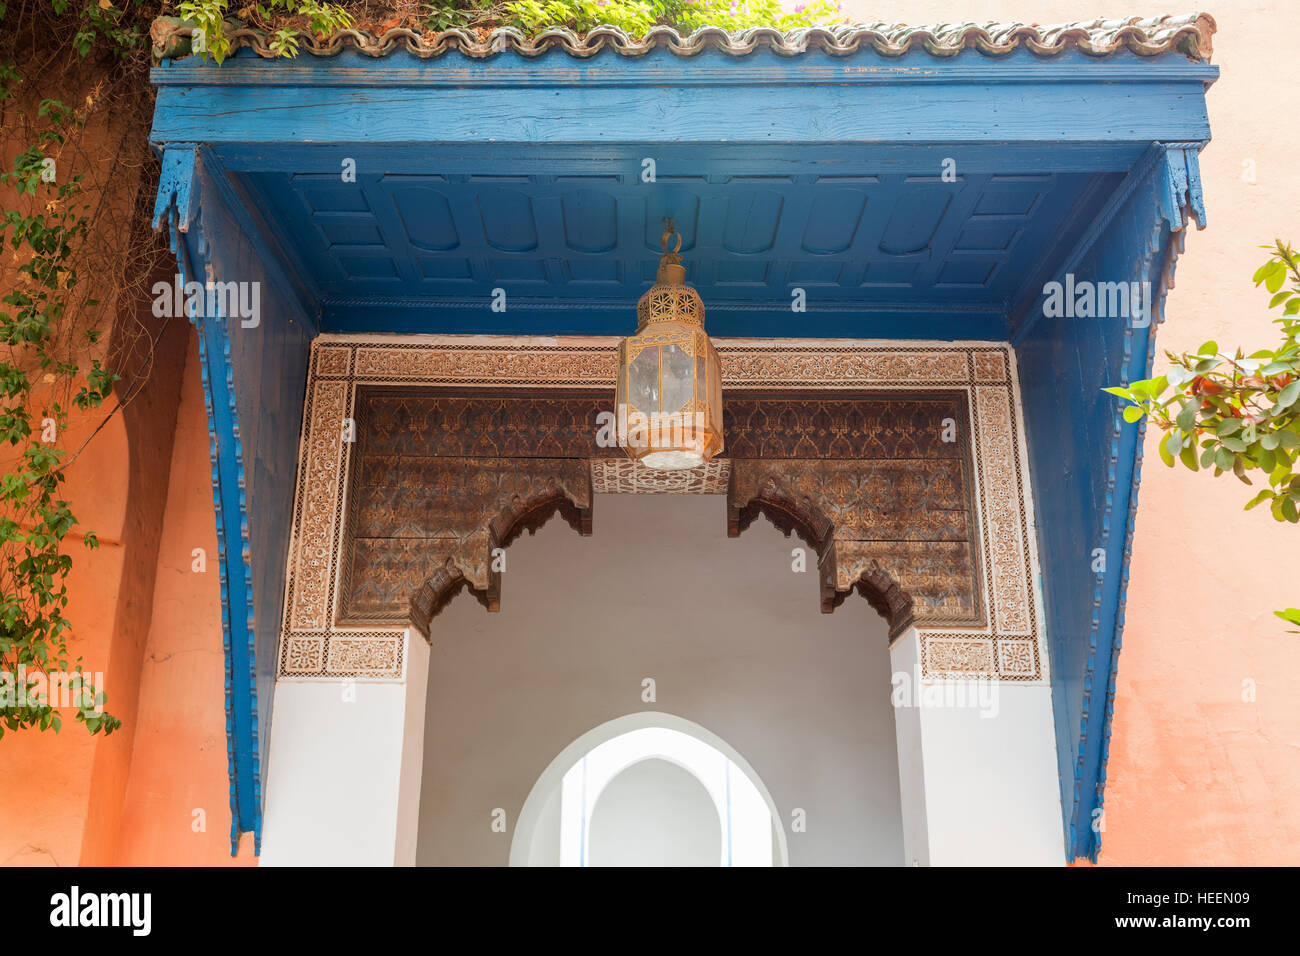 Palais de la Bahia, Marrakech, Maroc Banque D'Images